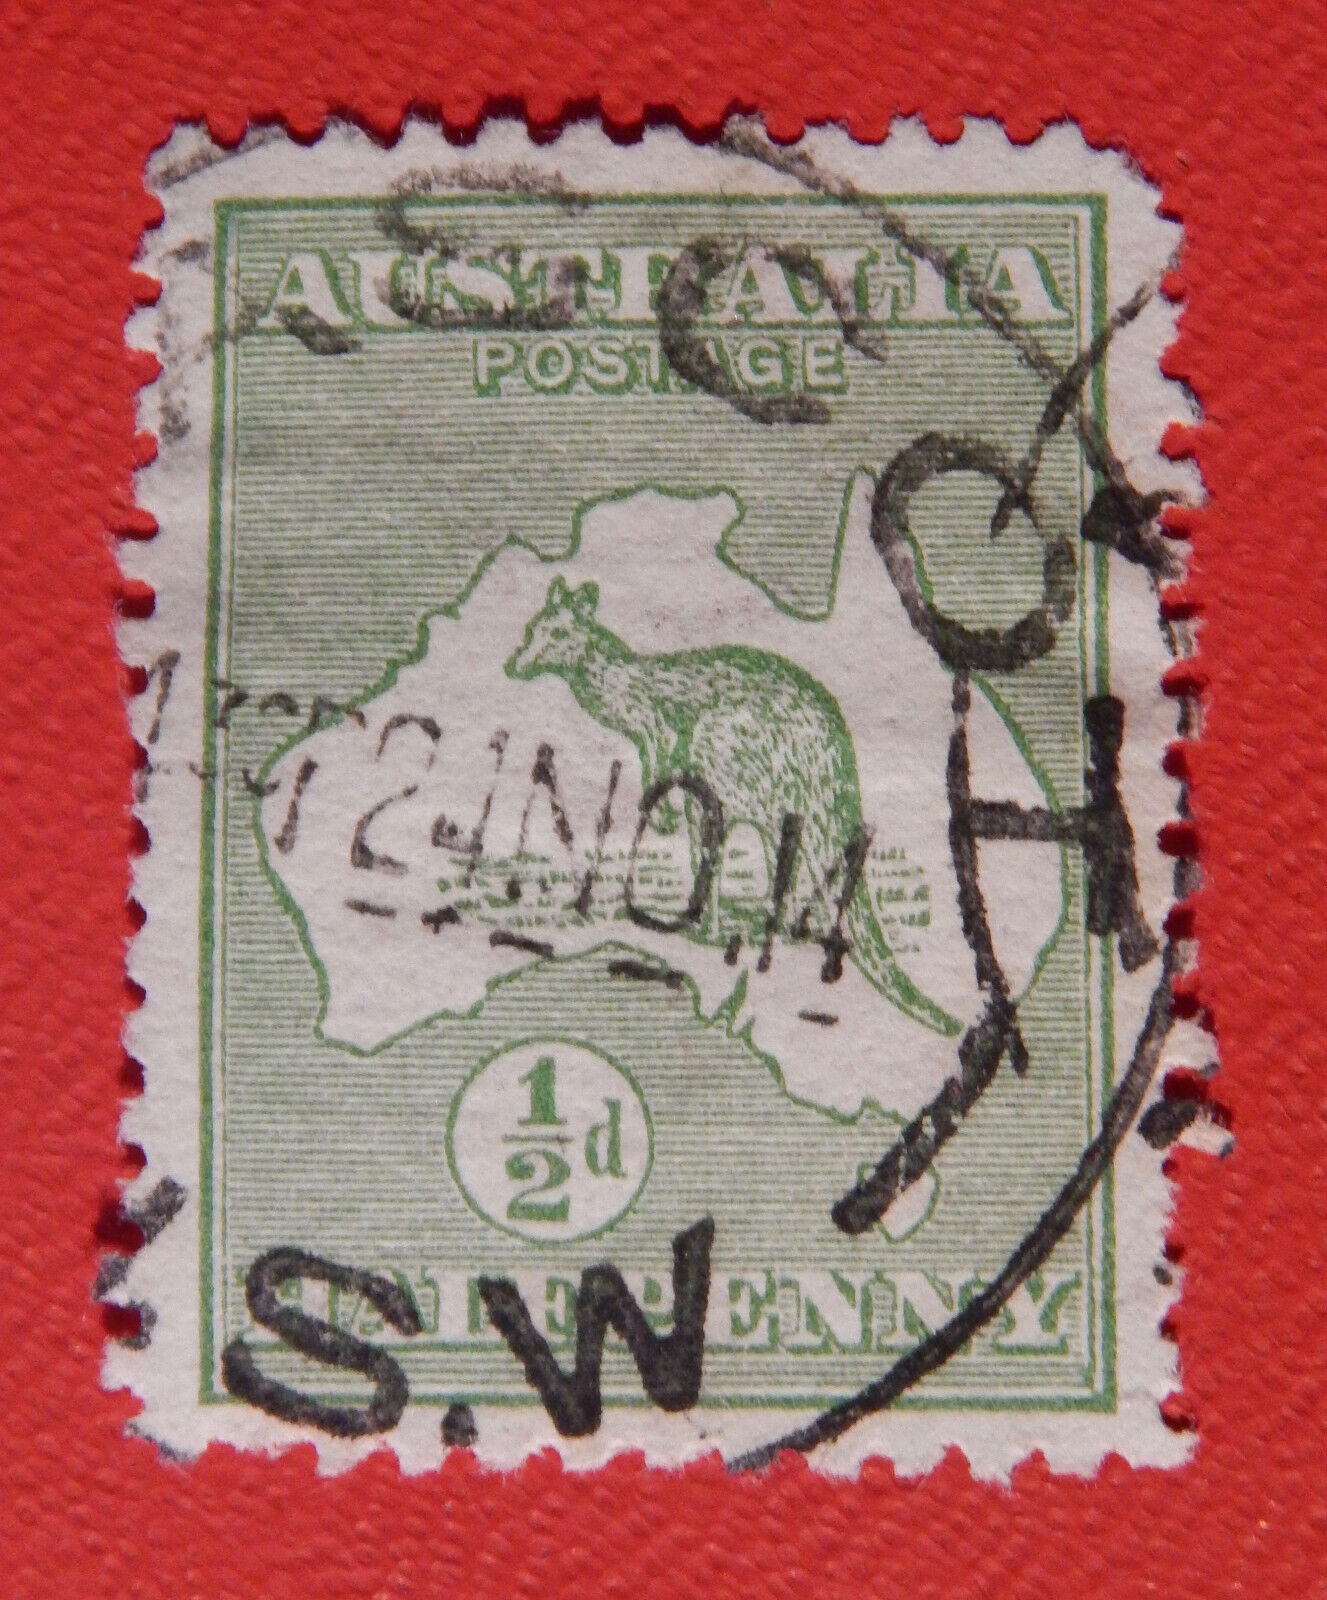 1913 Australia Roos 1/2 Penny Yellow Green Scott's #1 Stamp